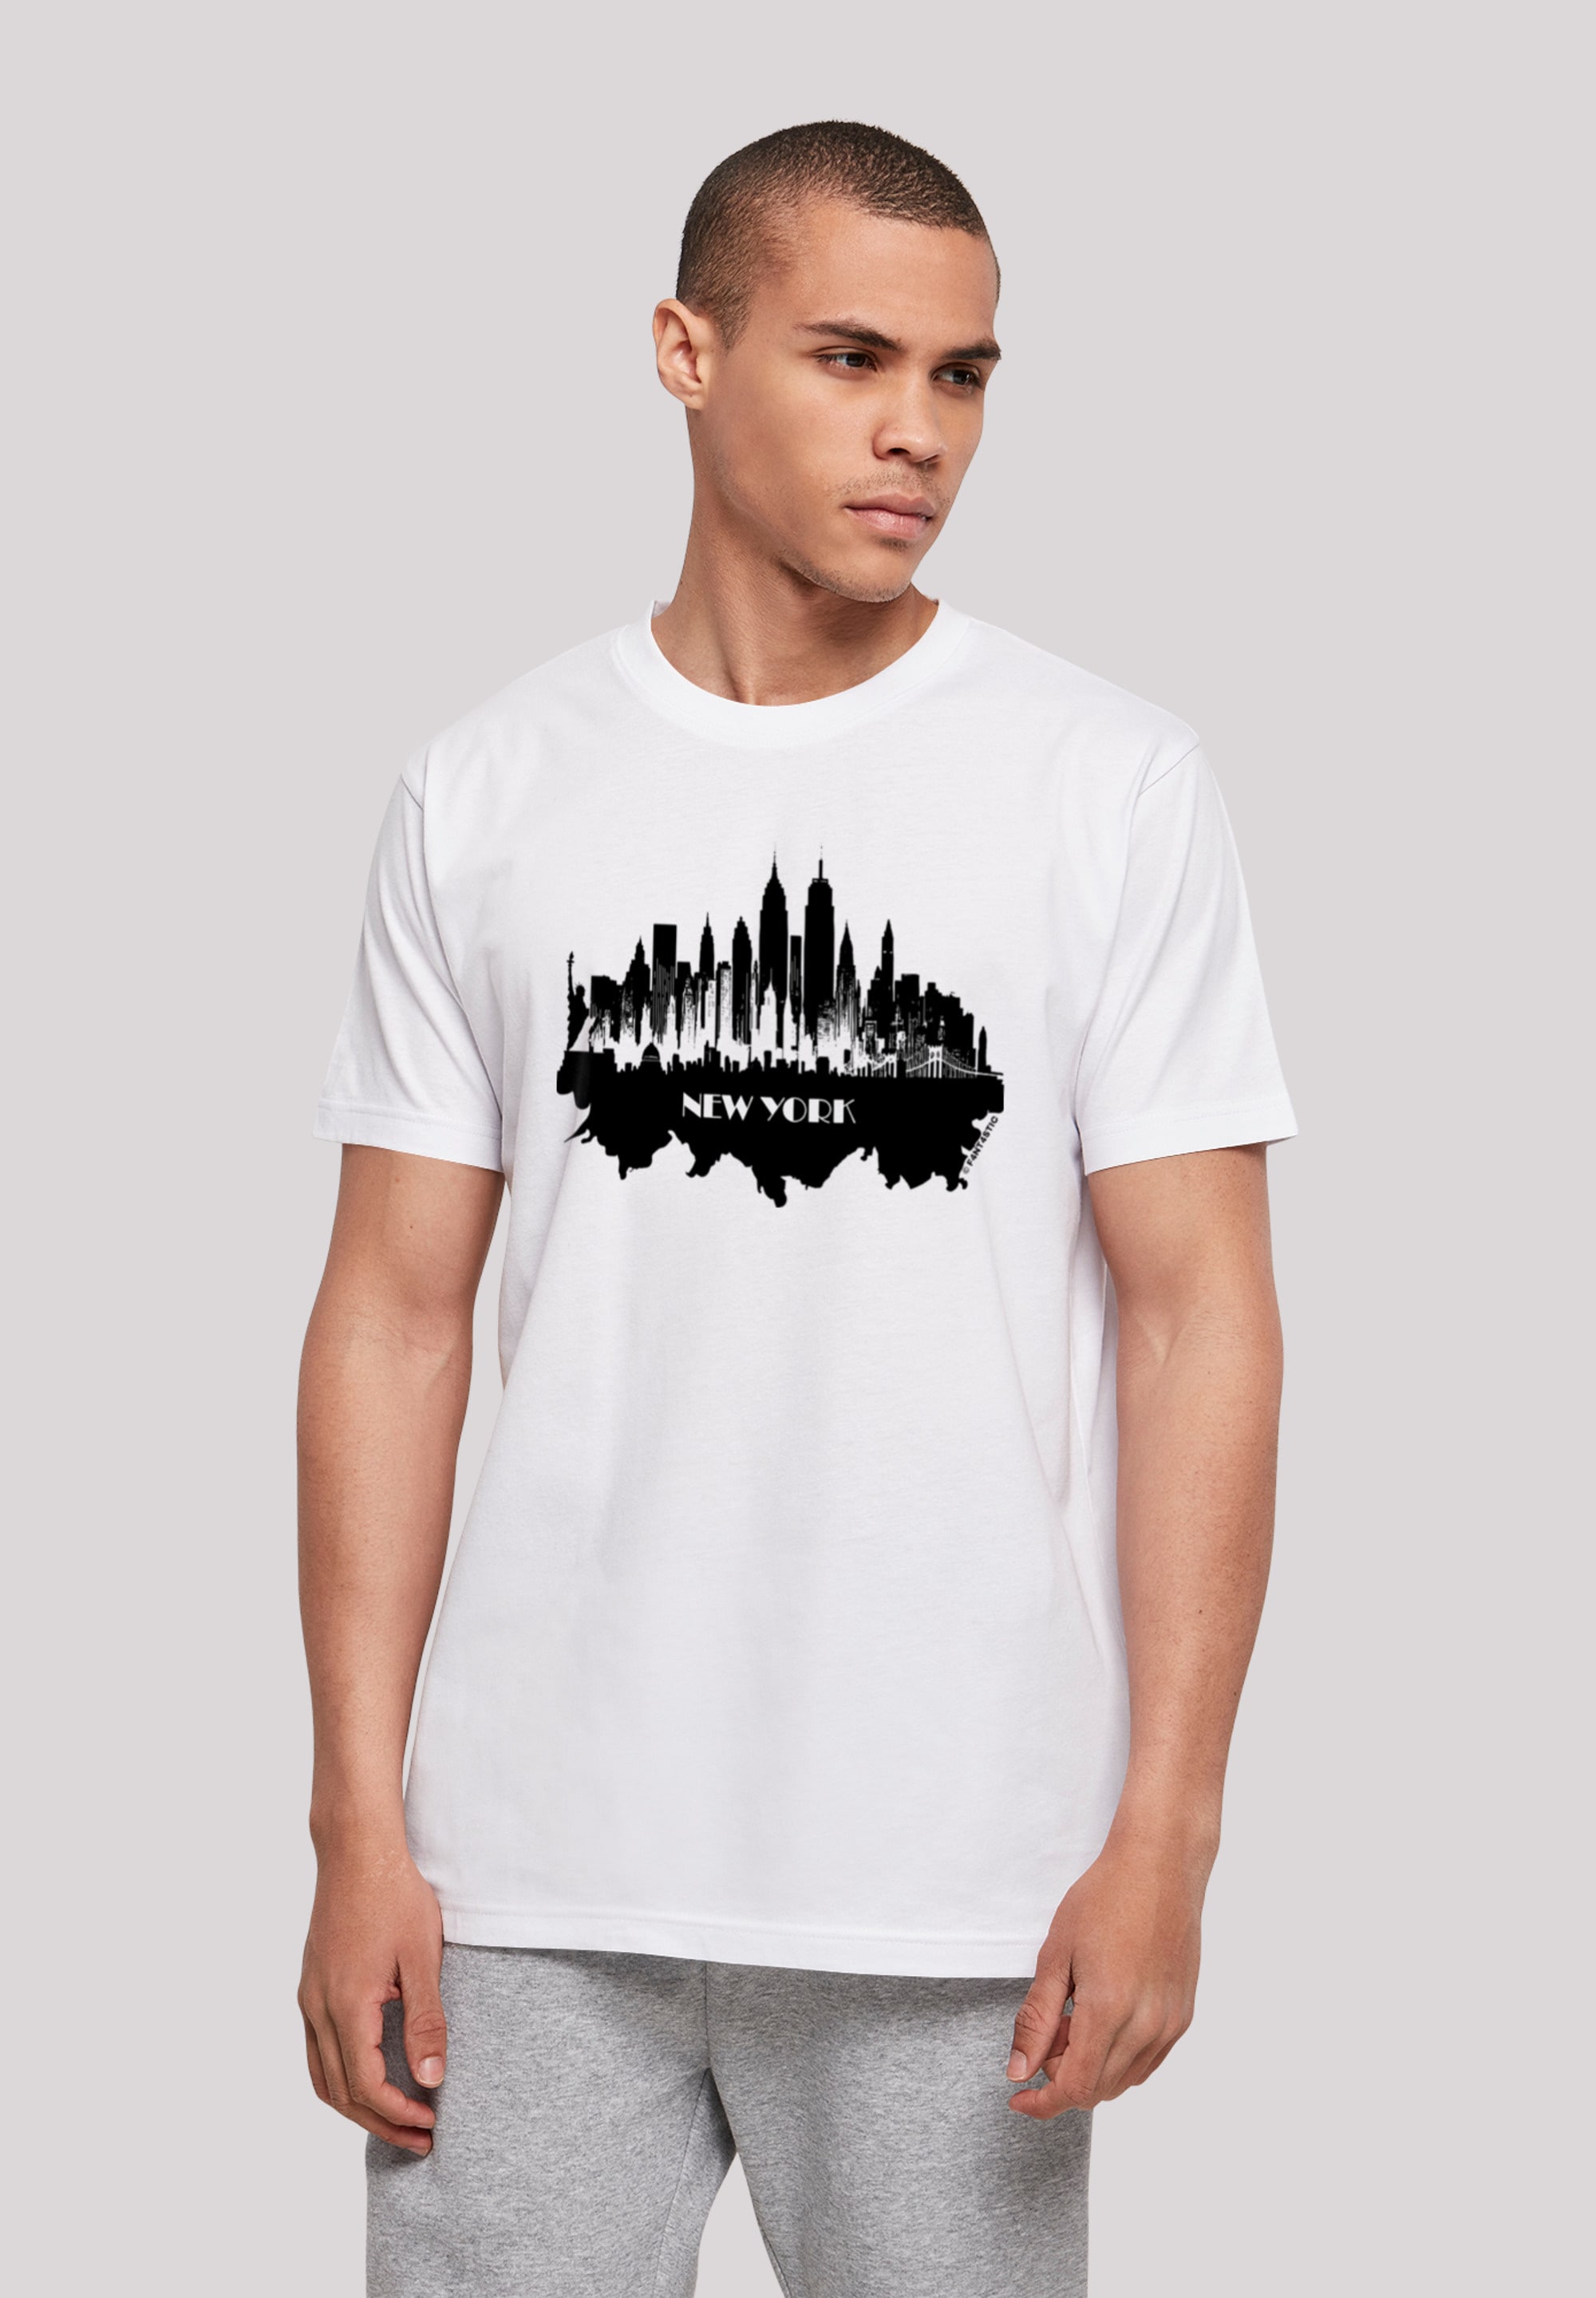 T-Shirt »Cities Collection - New York skyline«, Print